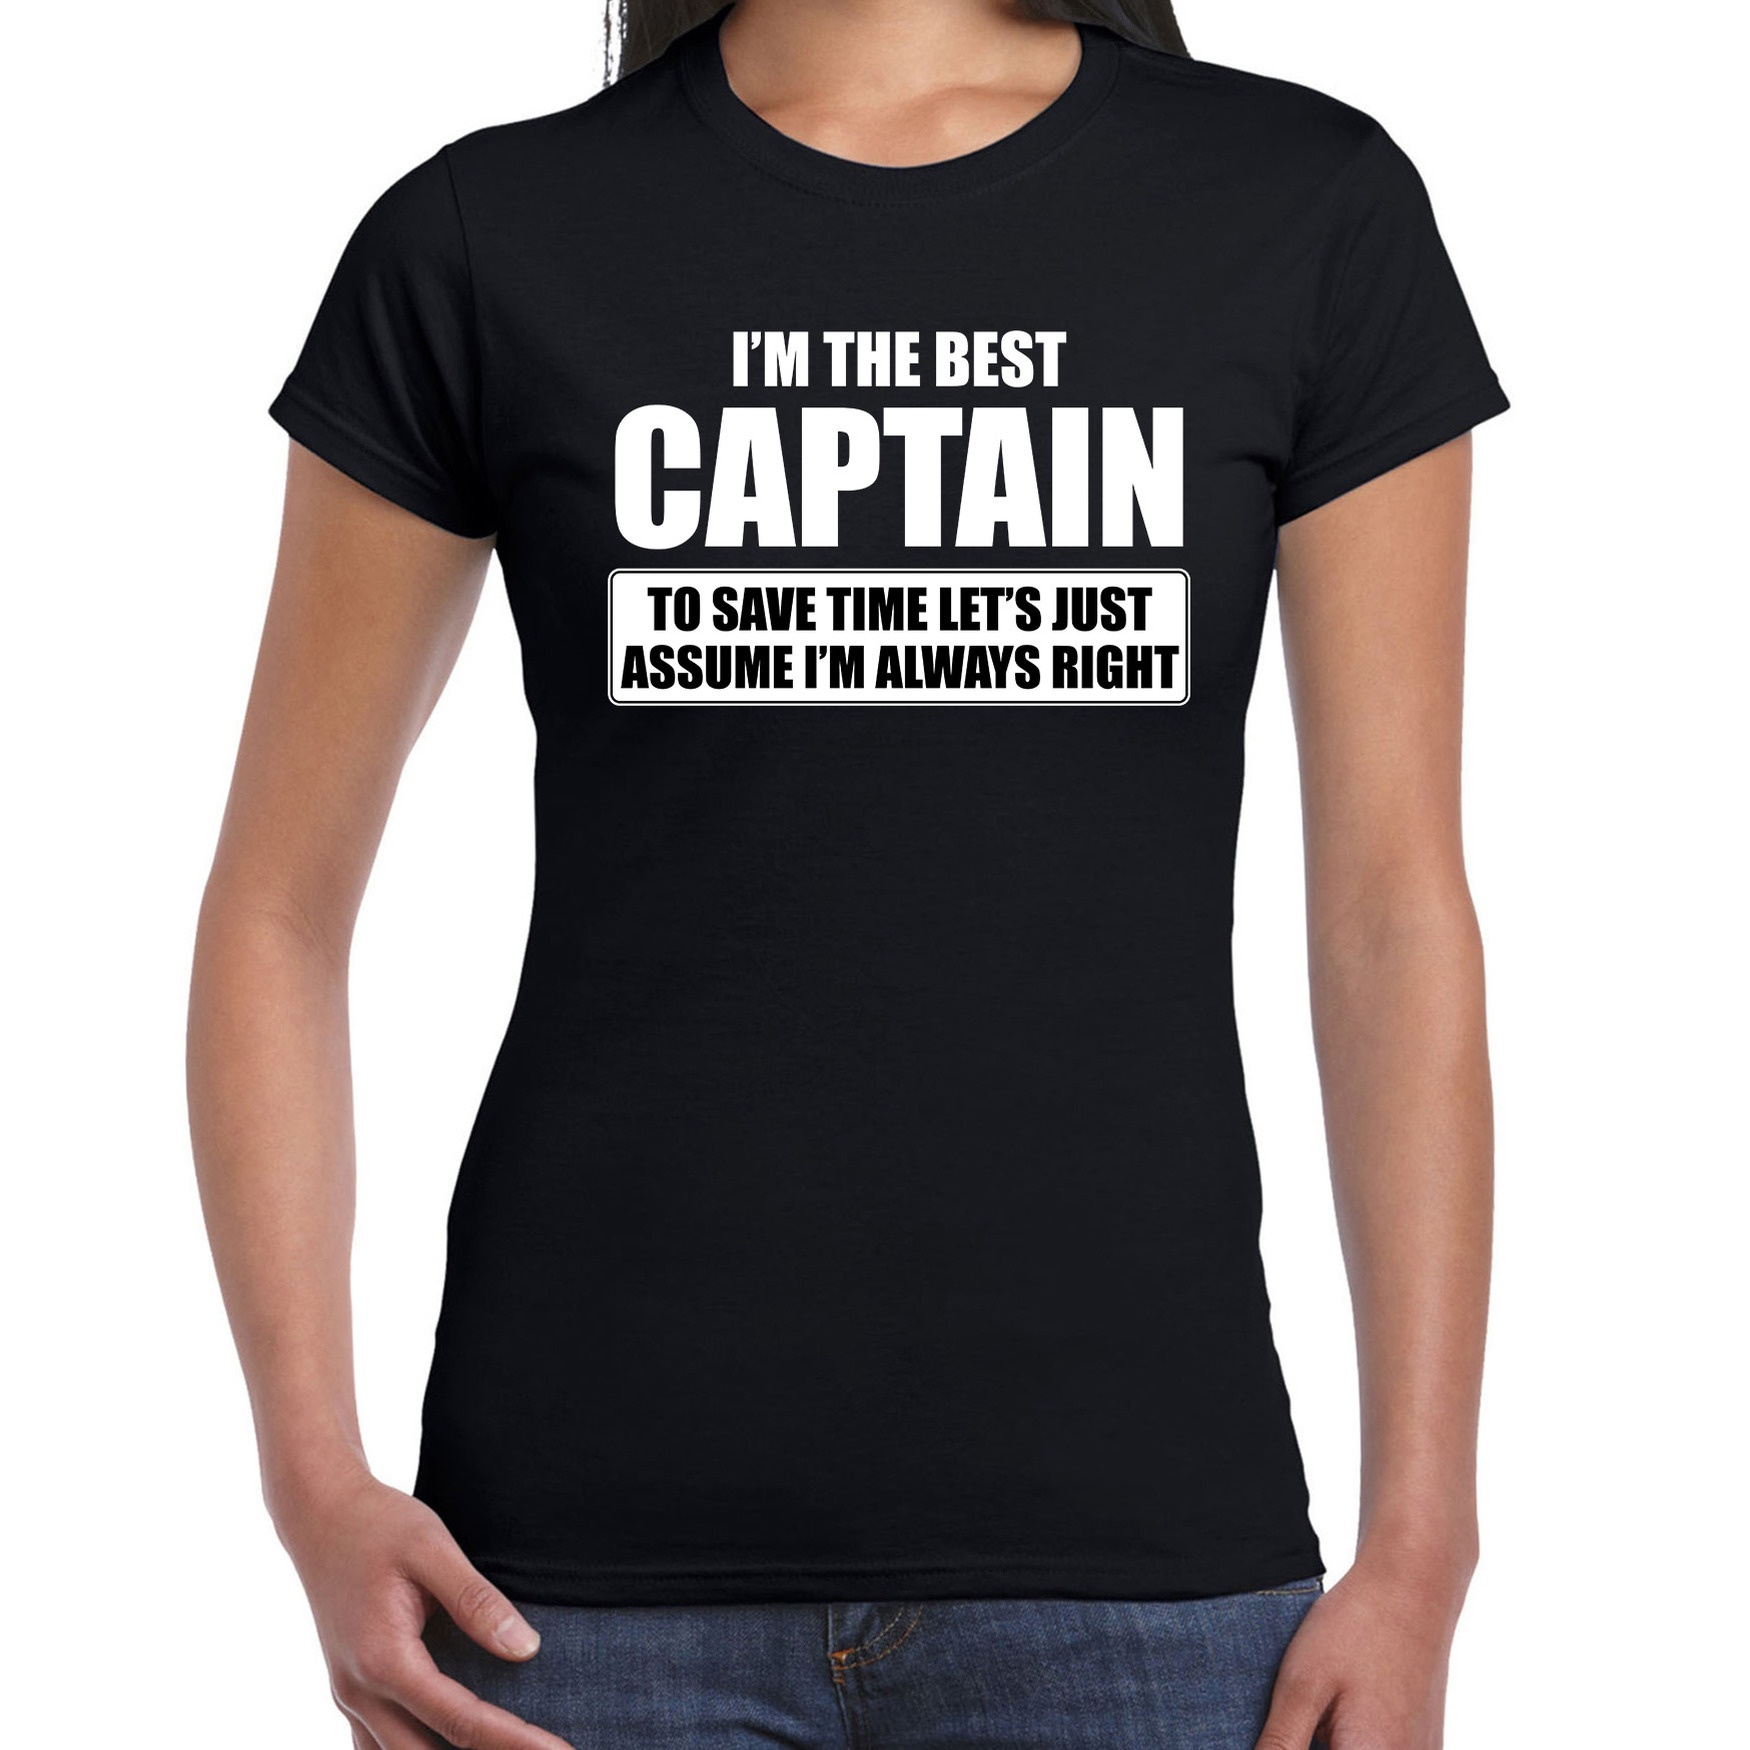 I'm the best captain t-shirt zwart dames De beste kapitein cadeau